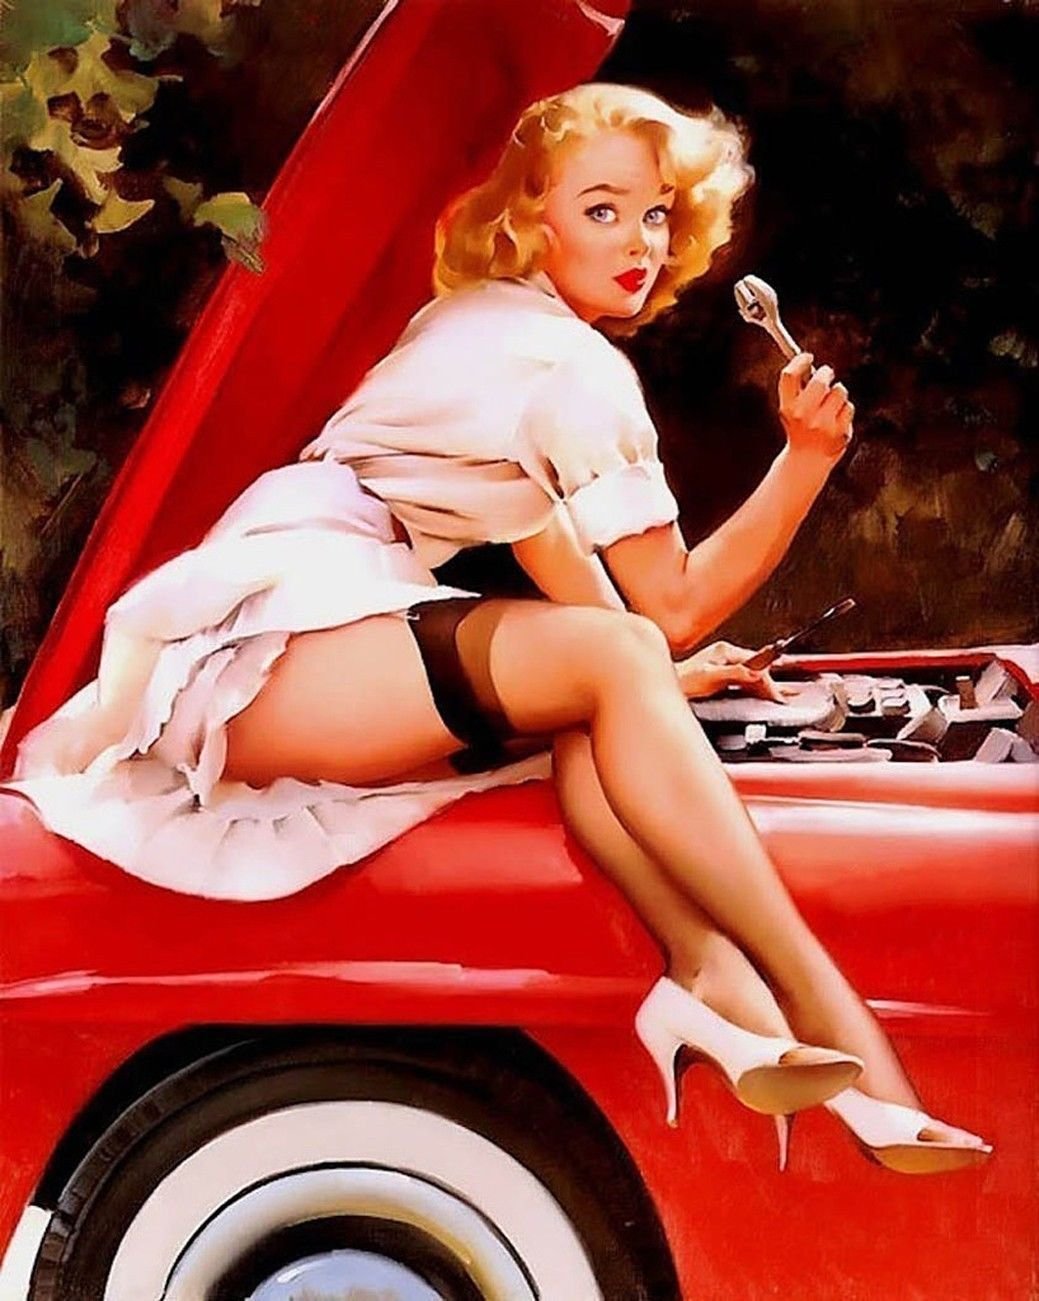 Vintage Gil Elvgren Pinup Girl Art 32x24 Poster Decor.